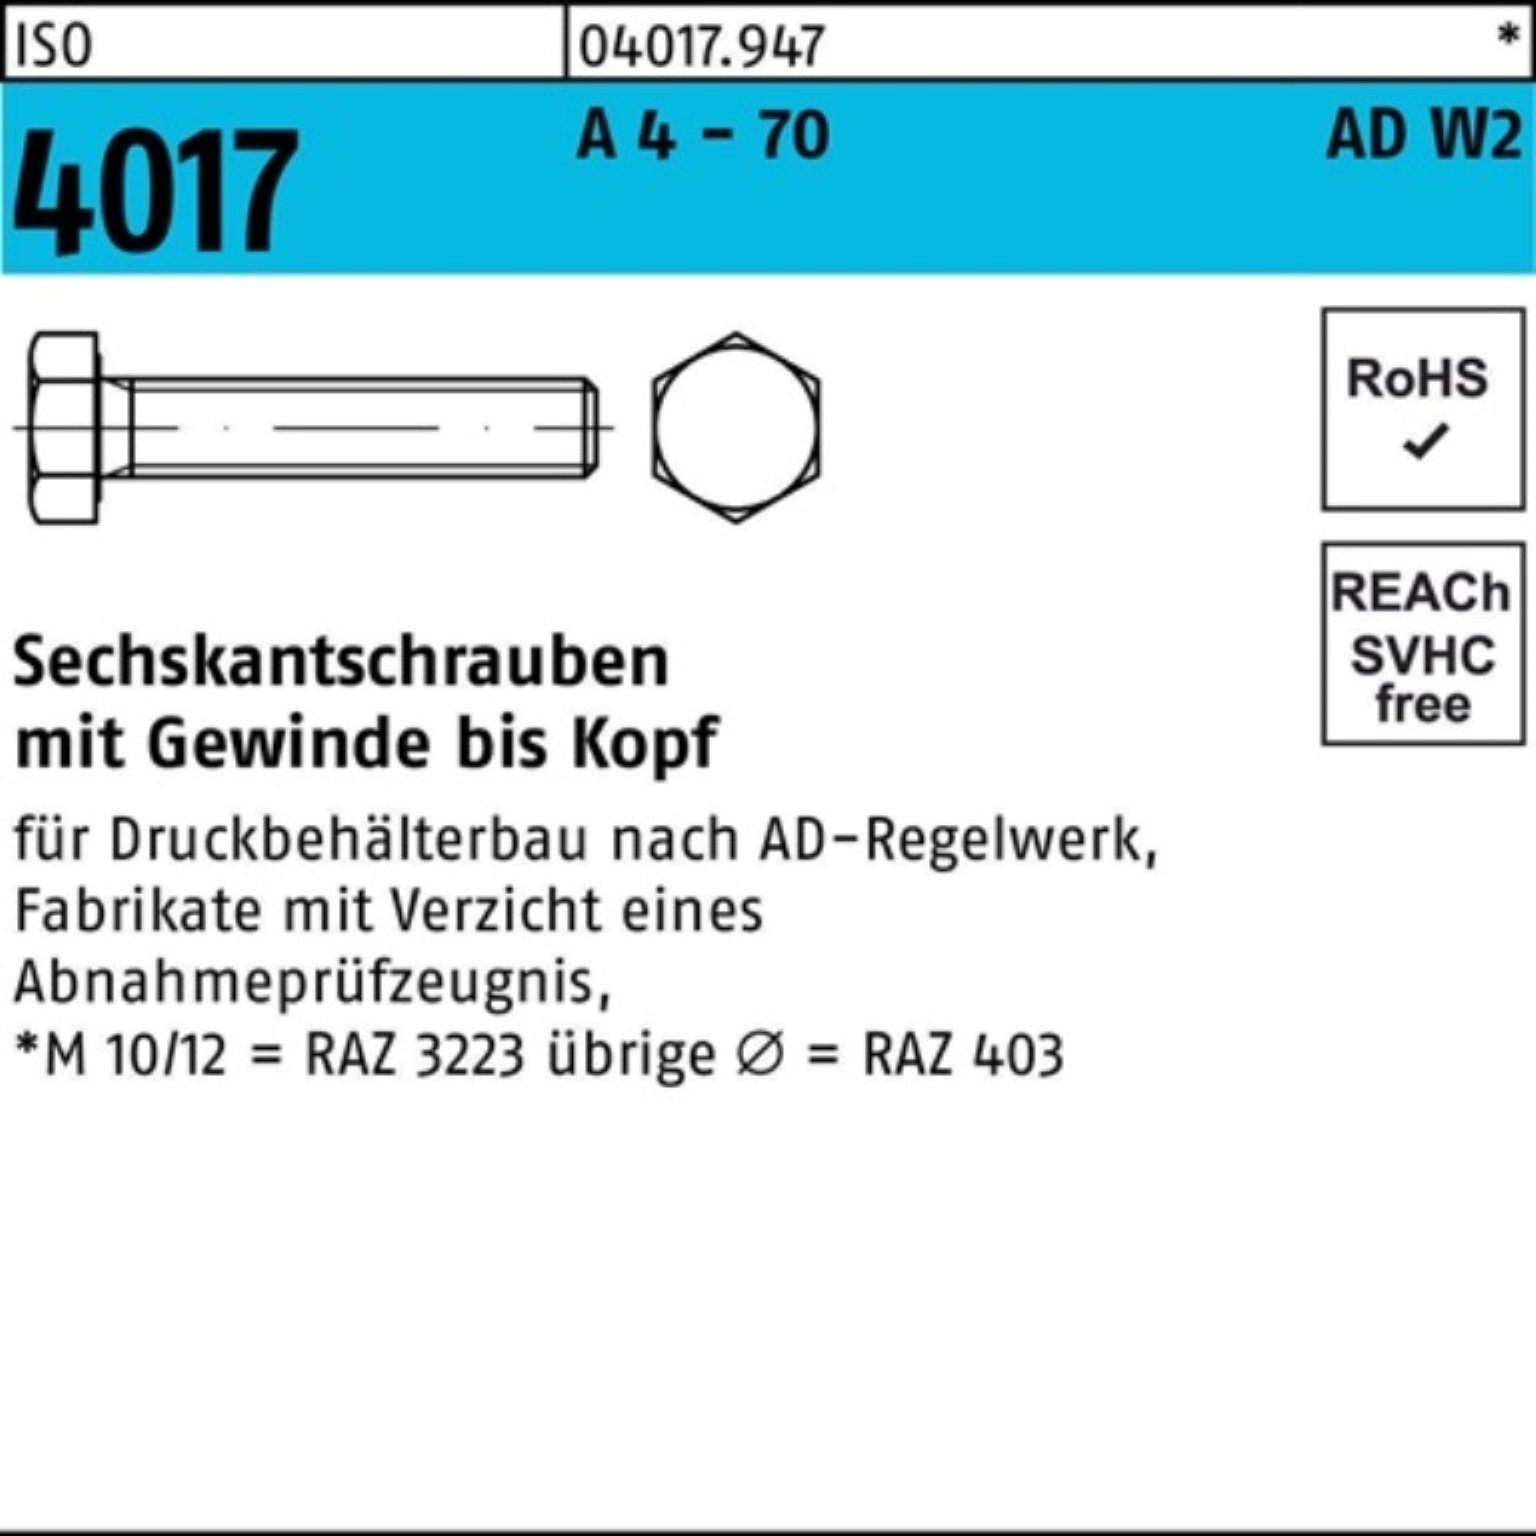 Bufab Sechskantschraube 100er Pack Sechskantschraube ISO 4017 VG M12x 65 A 4 - 70 AD-W2 50 St